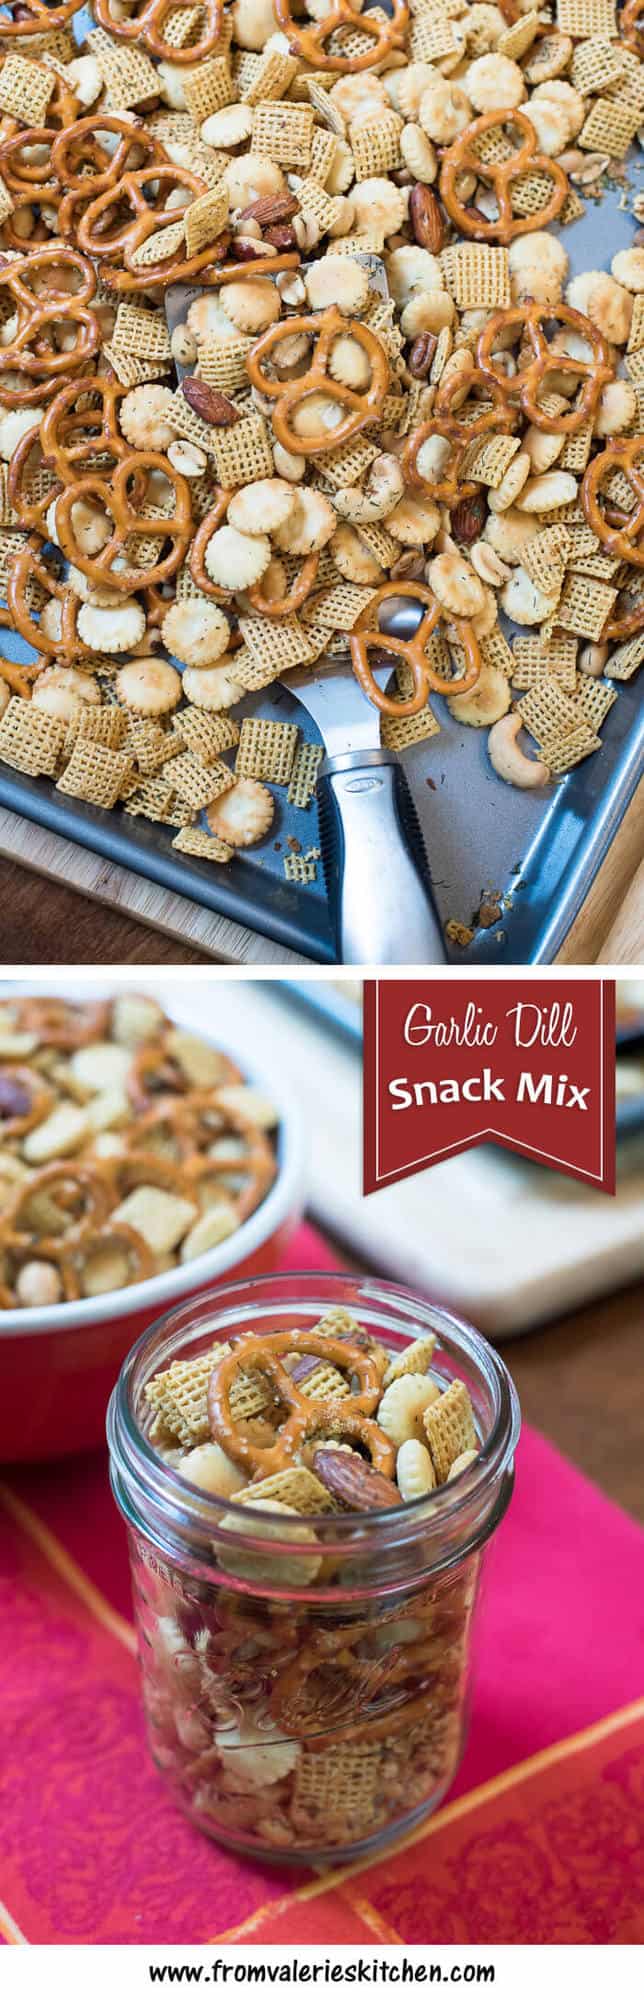 Garlic Dill Snack Mix